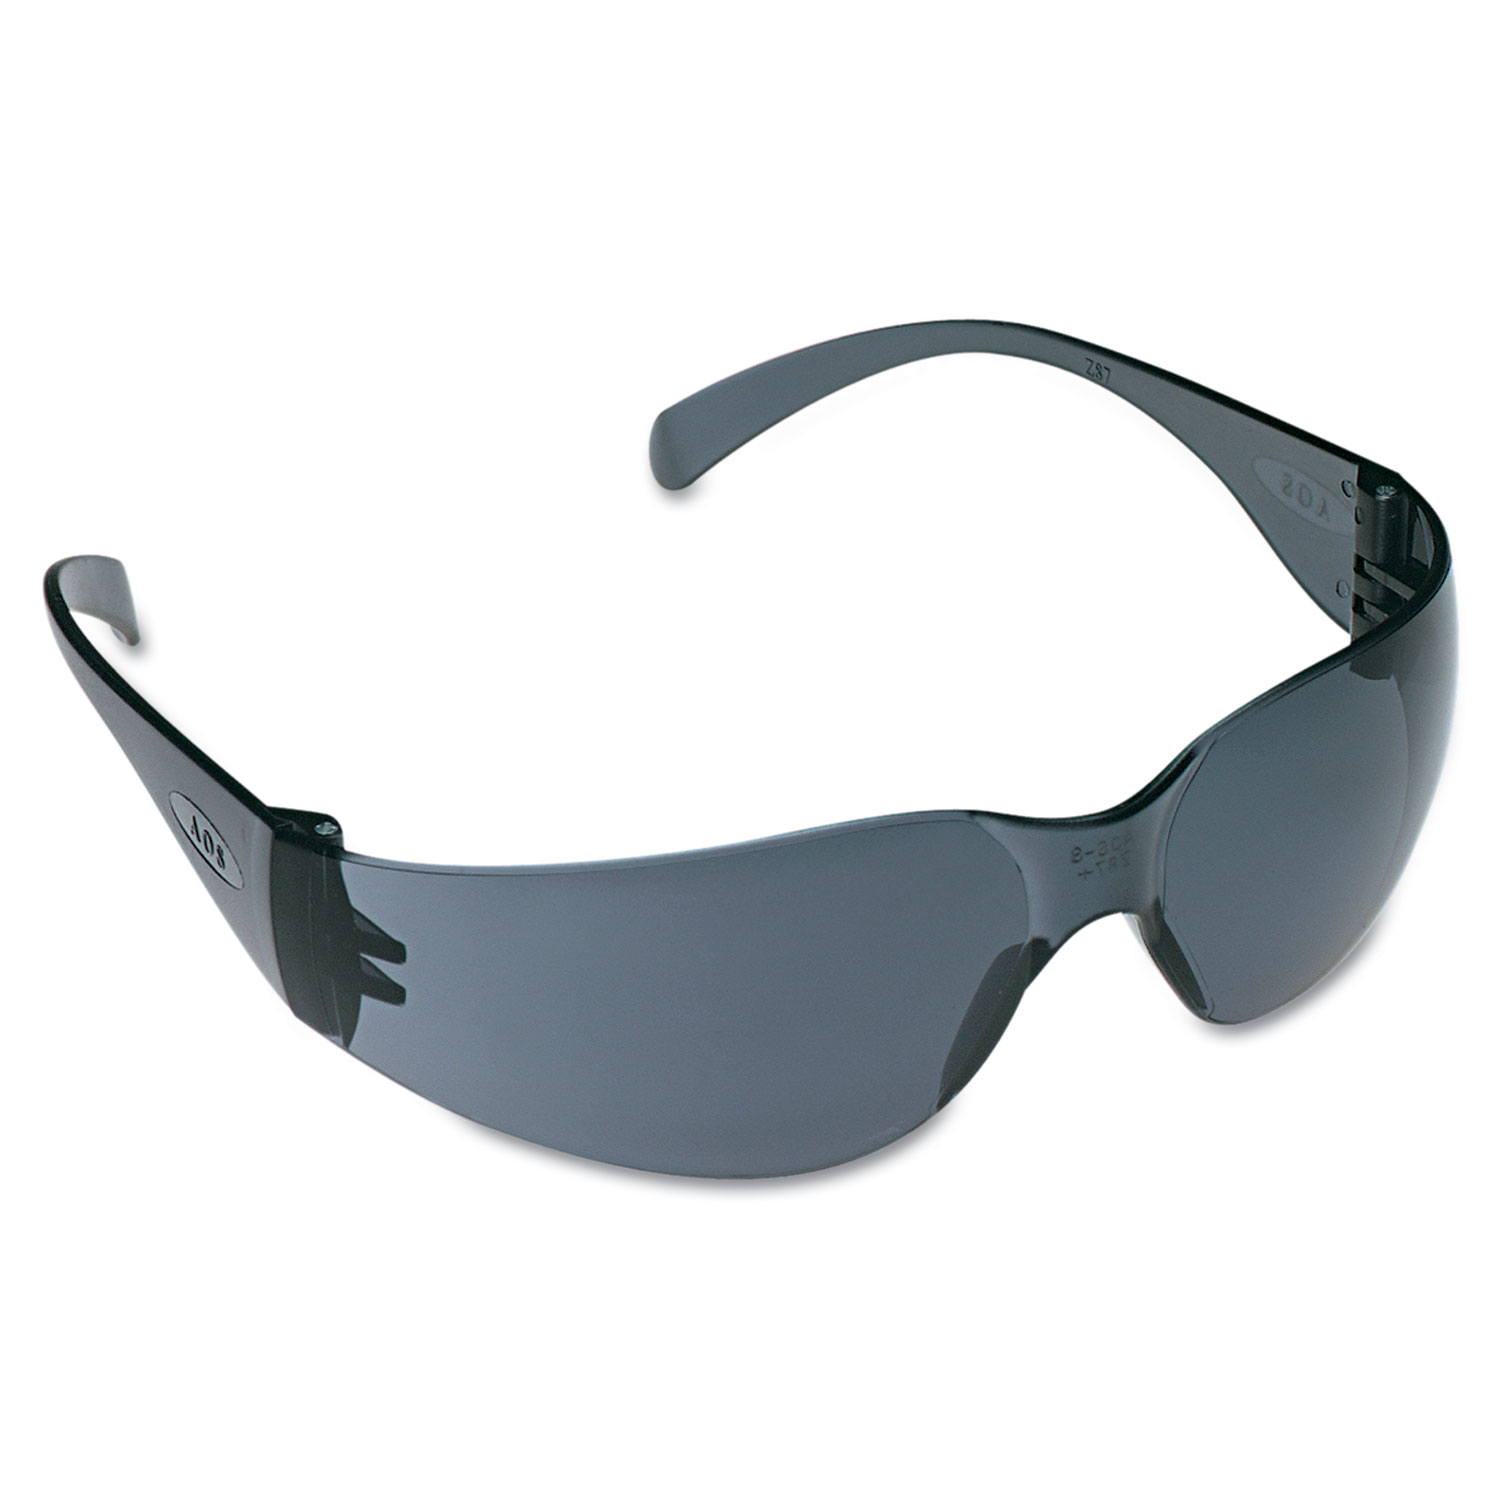 Virtua Protective Eyewear, Gray Frame, Gray Hard-Coat Lens